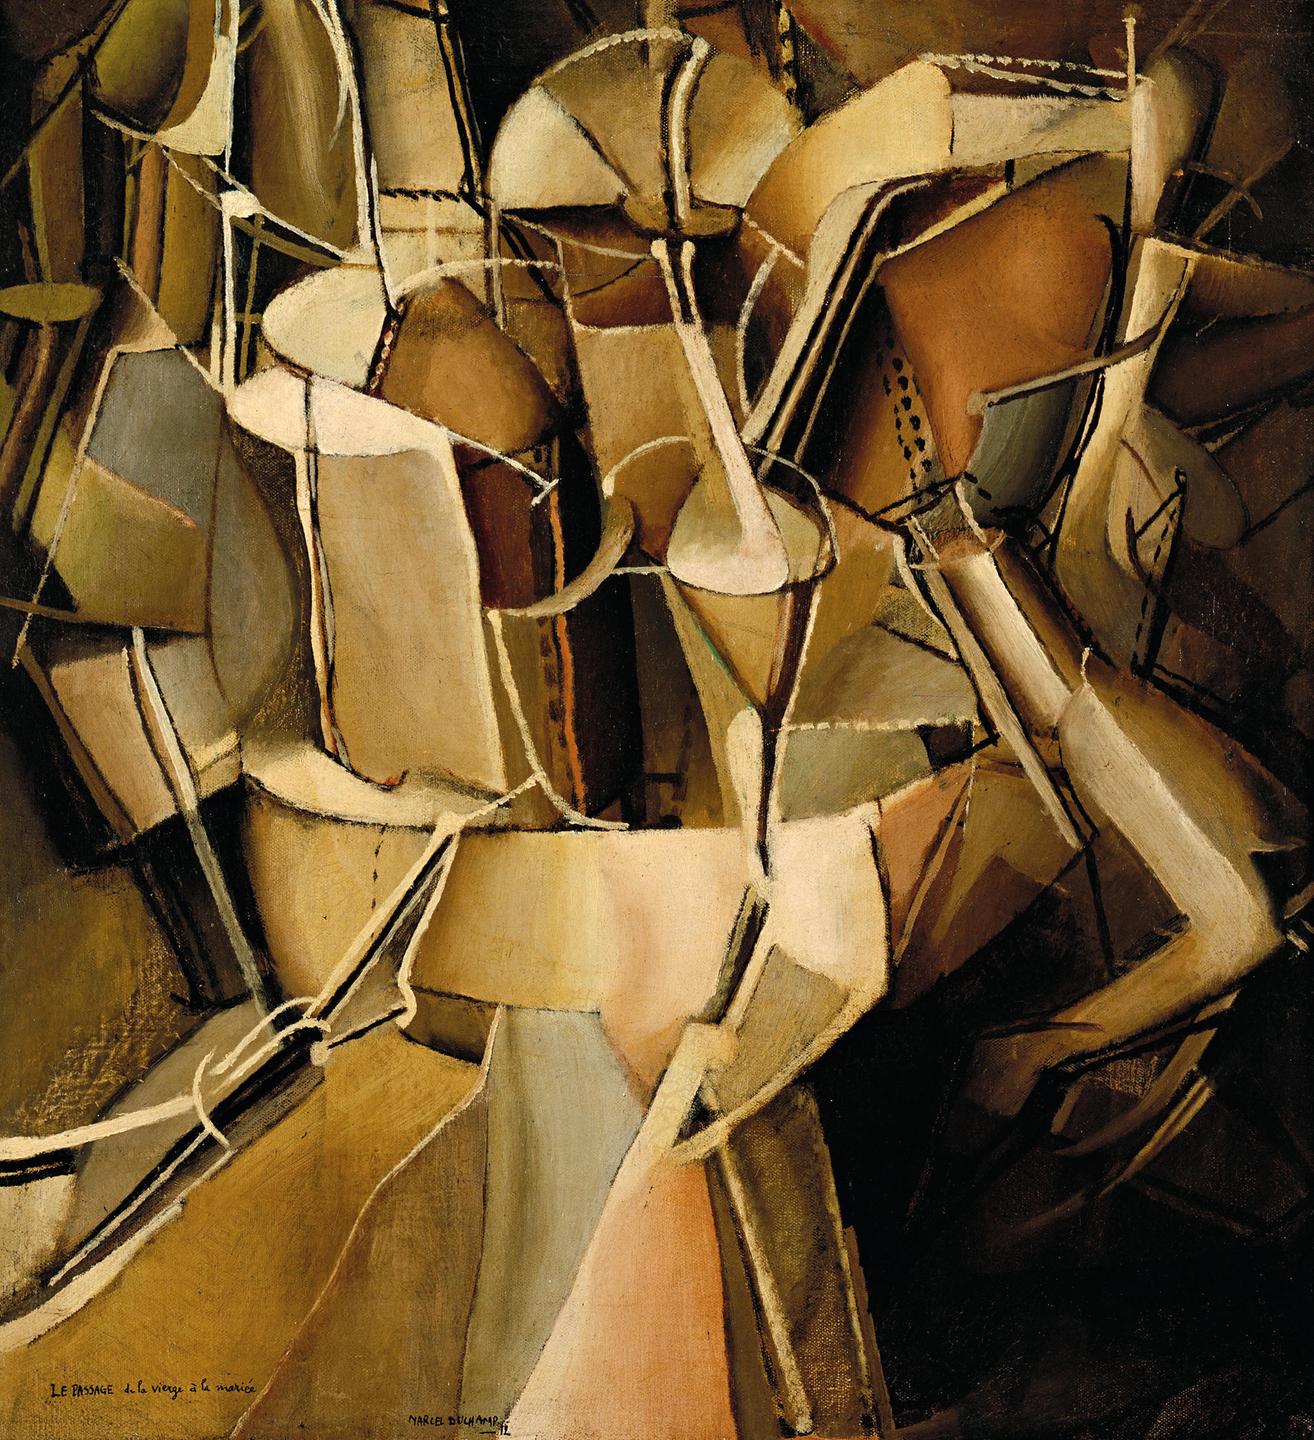 Marcel Duchamps kubistisches Gemälde: Le Passage de la Vierge à la Mariée (Der Übergang von der Jungfrau zur Neuvermählten), 1912.